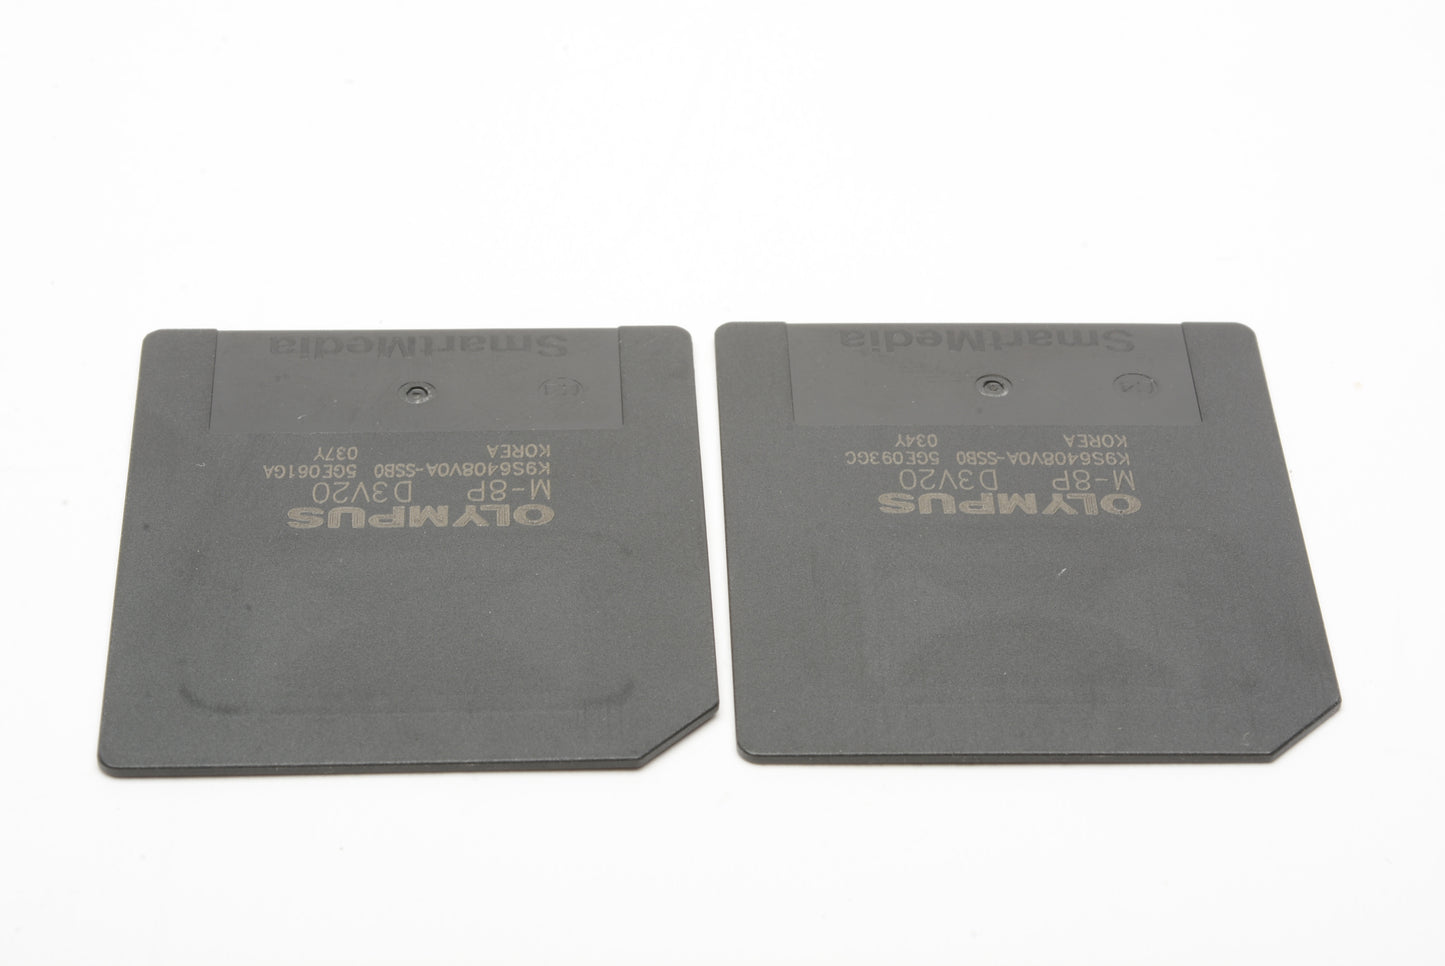 Set of 2 Olympus Smartmedia 8MB cards